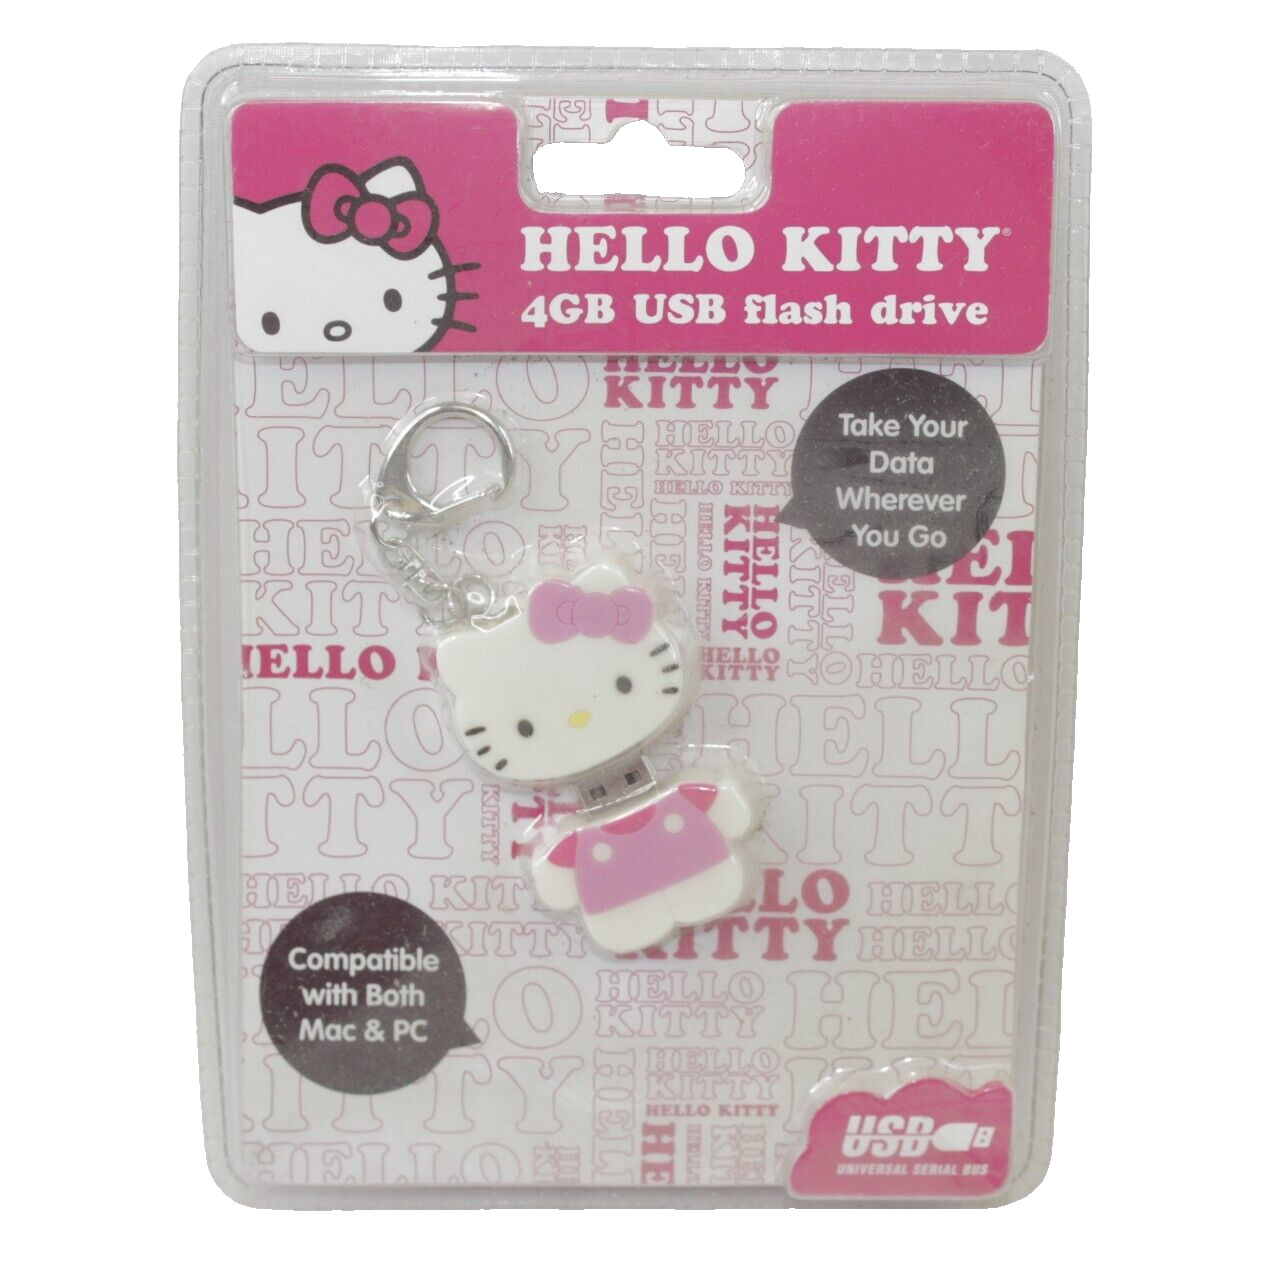 Hello Kitty 4GB USB Flash Drive Sanrio 2012 Sakar Mac & PC Compatible * New *